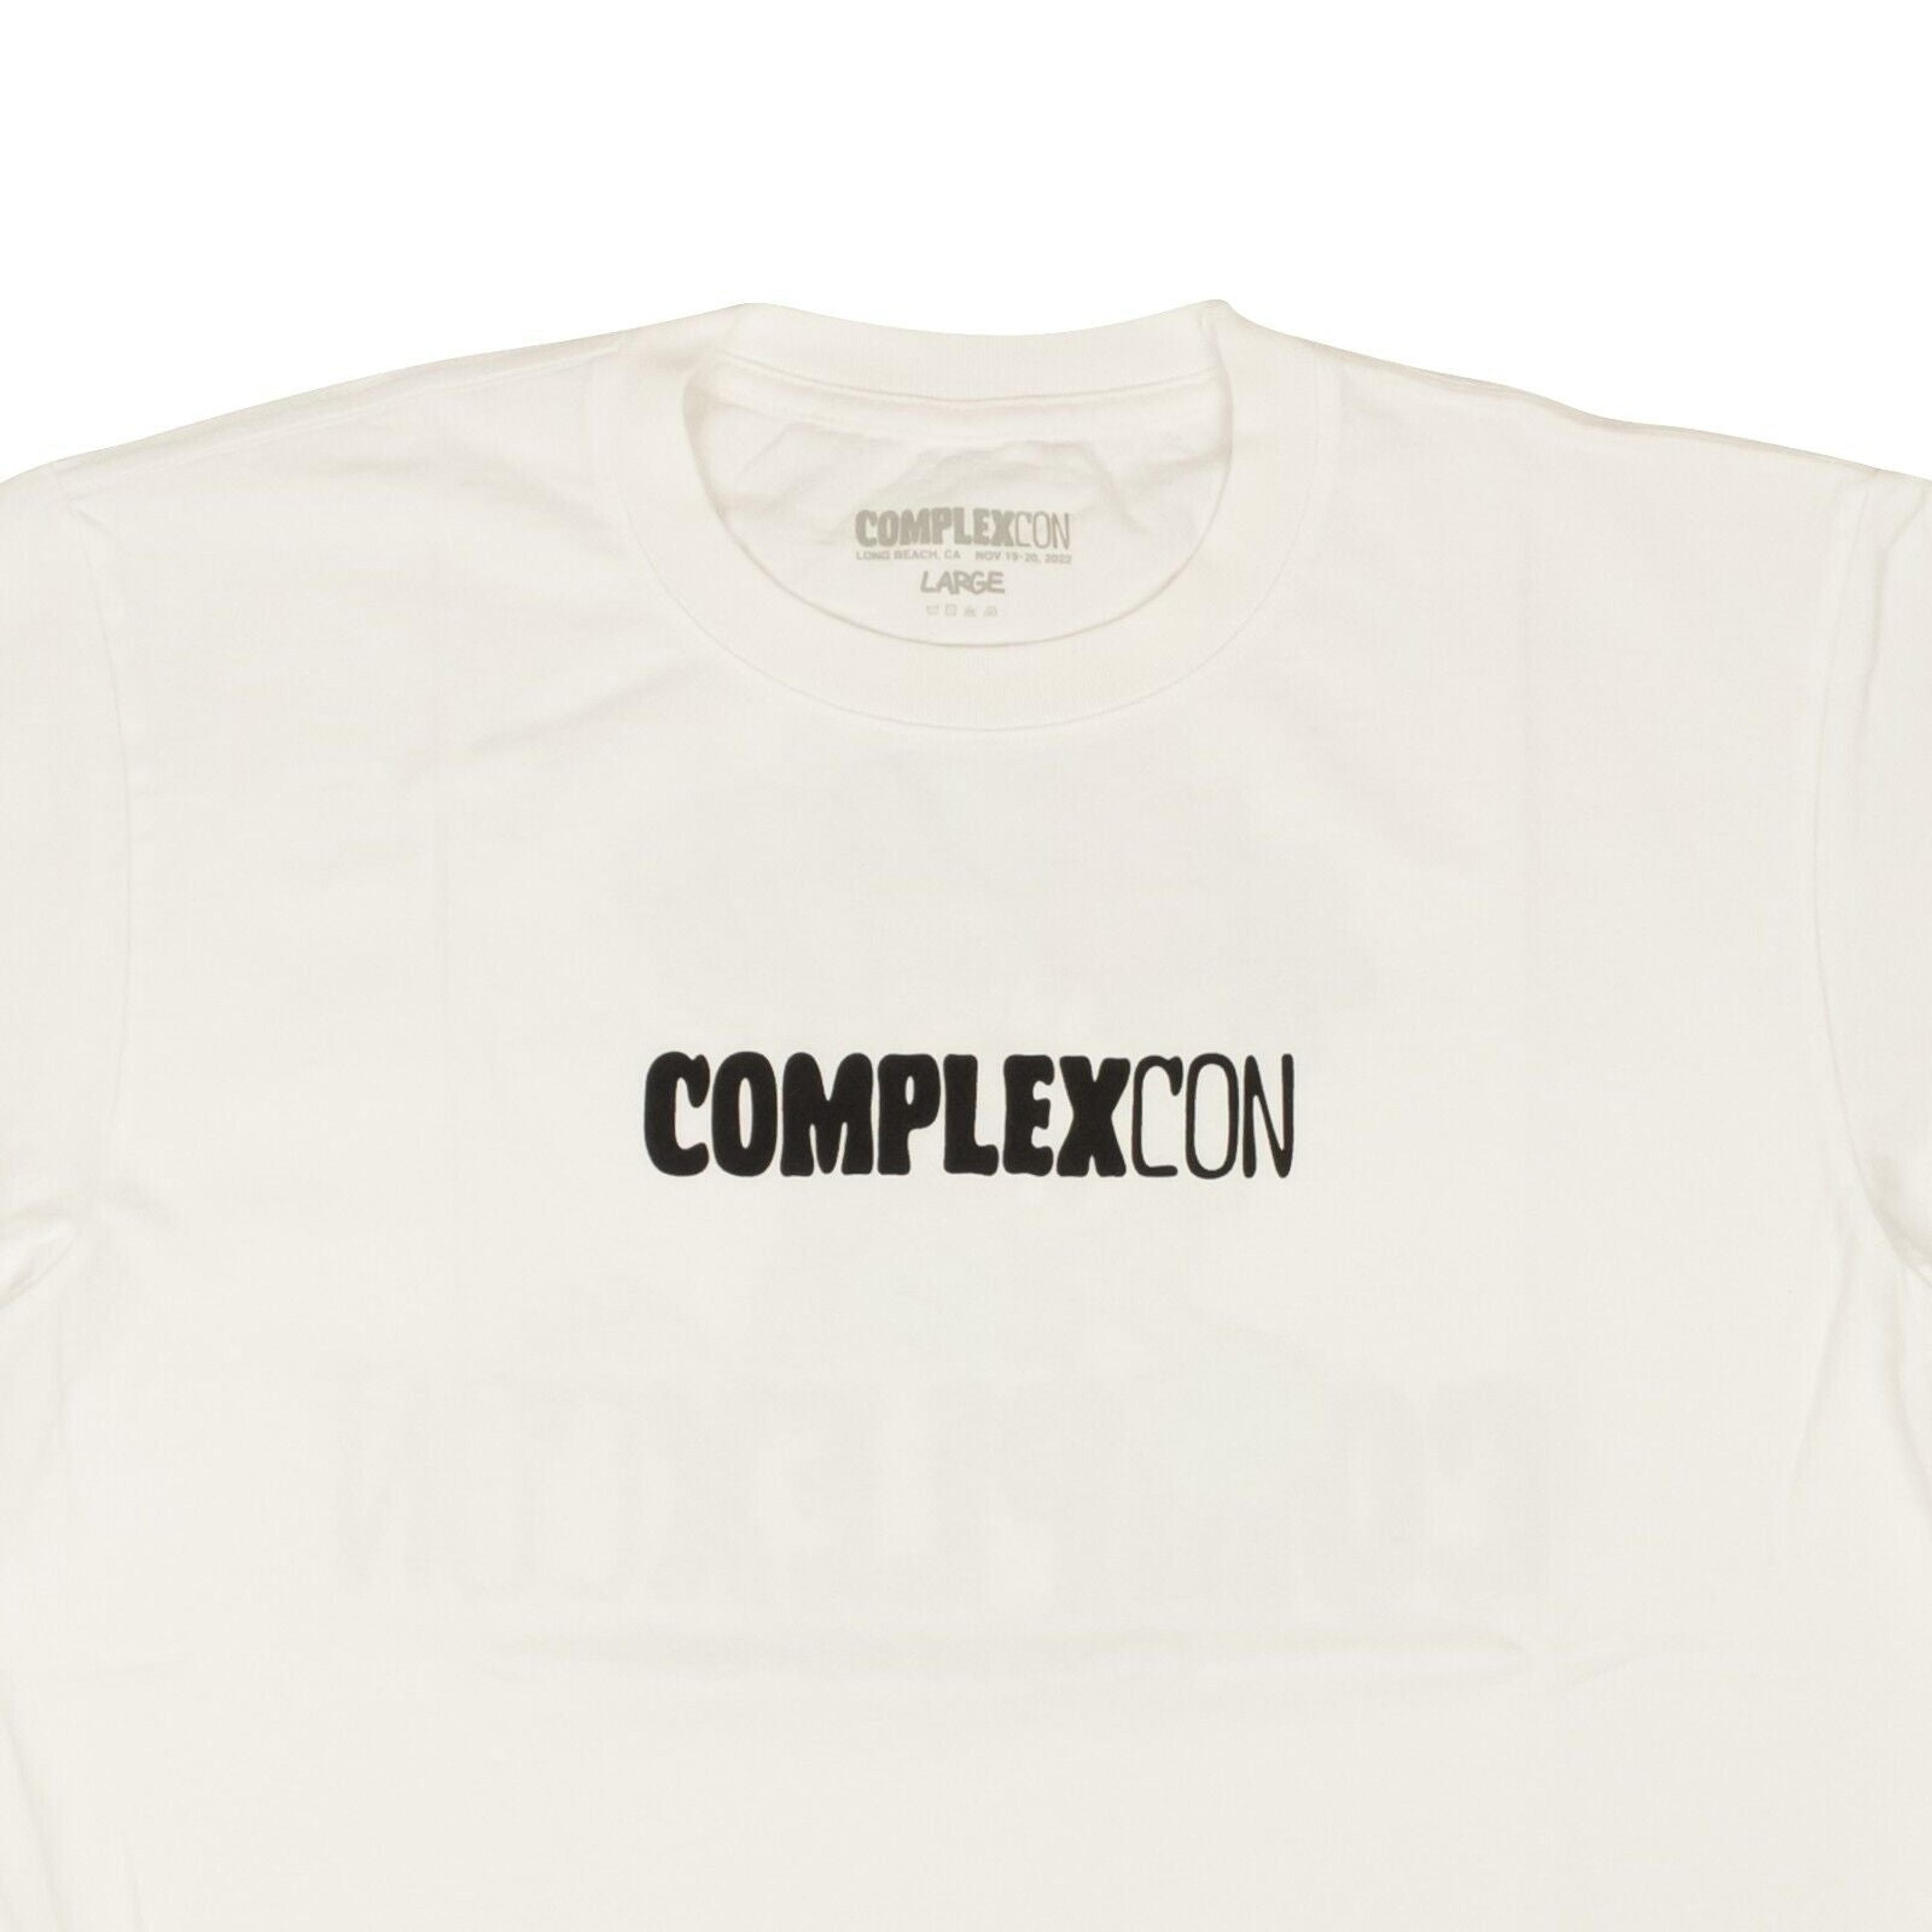 Alternate View 1 of White Cotton Visty Logo T-Shirt